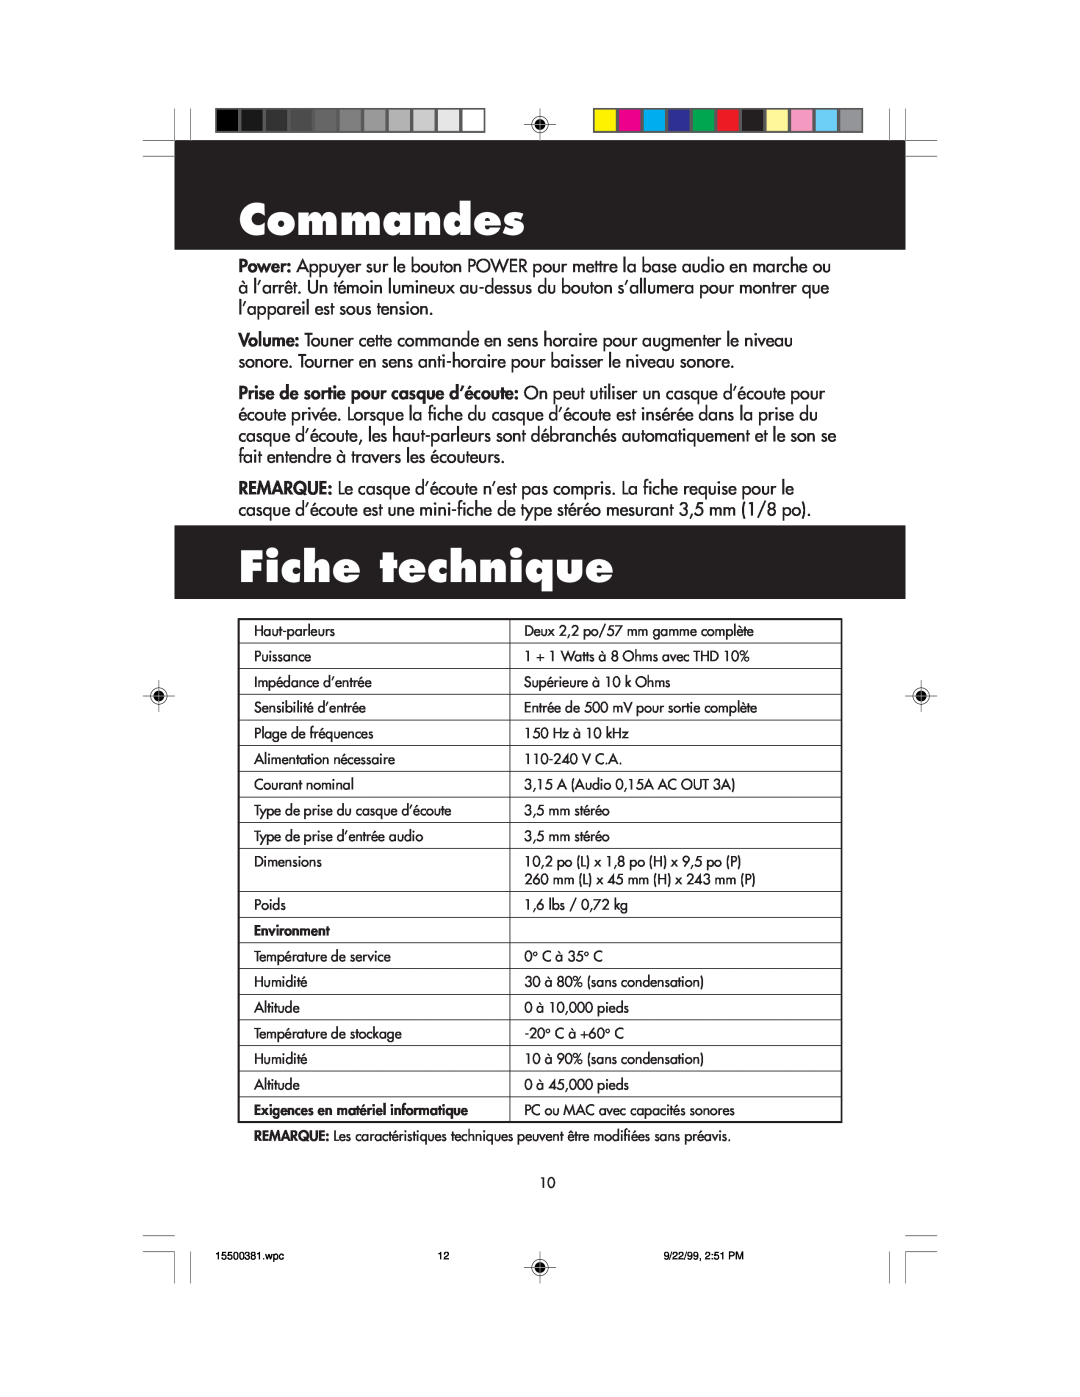 NEC FE700M manual Commandes, Fiche technique 